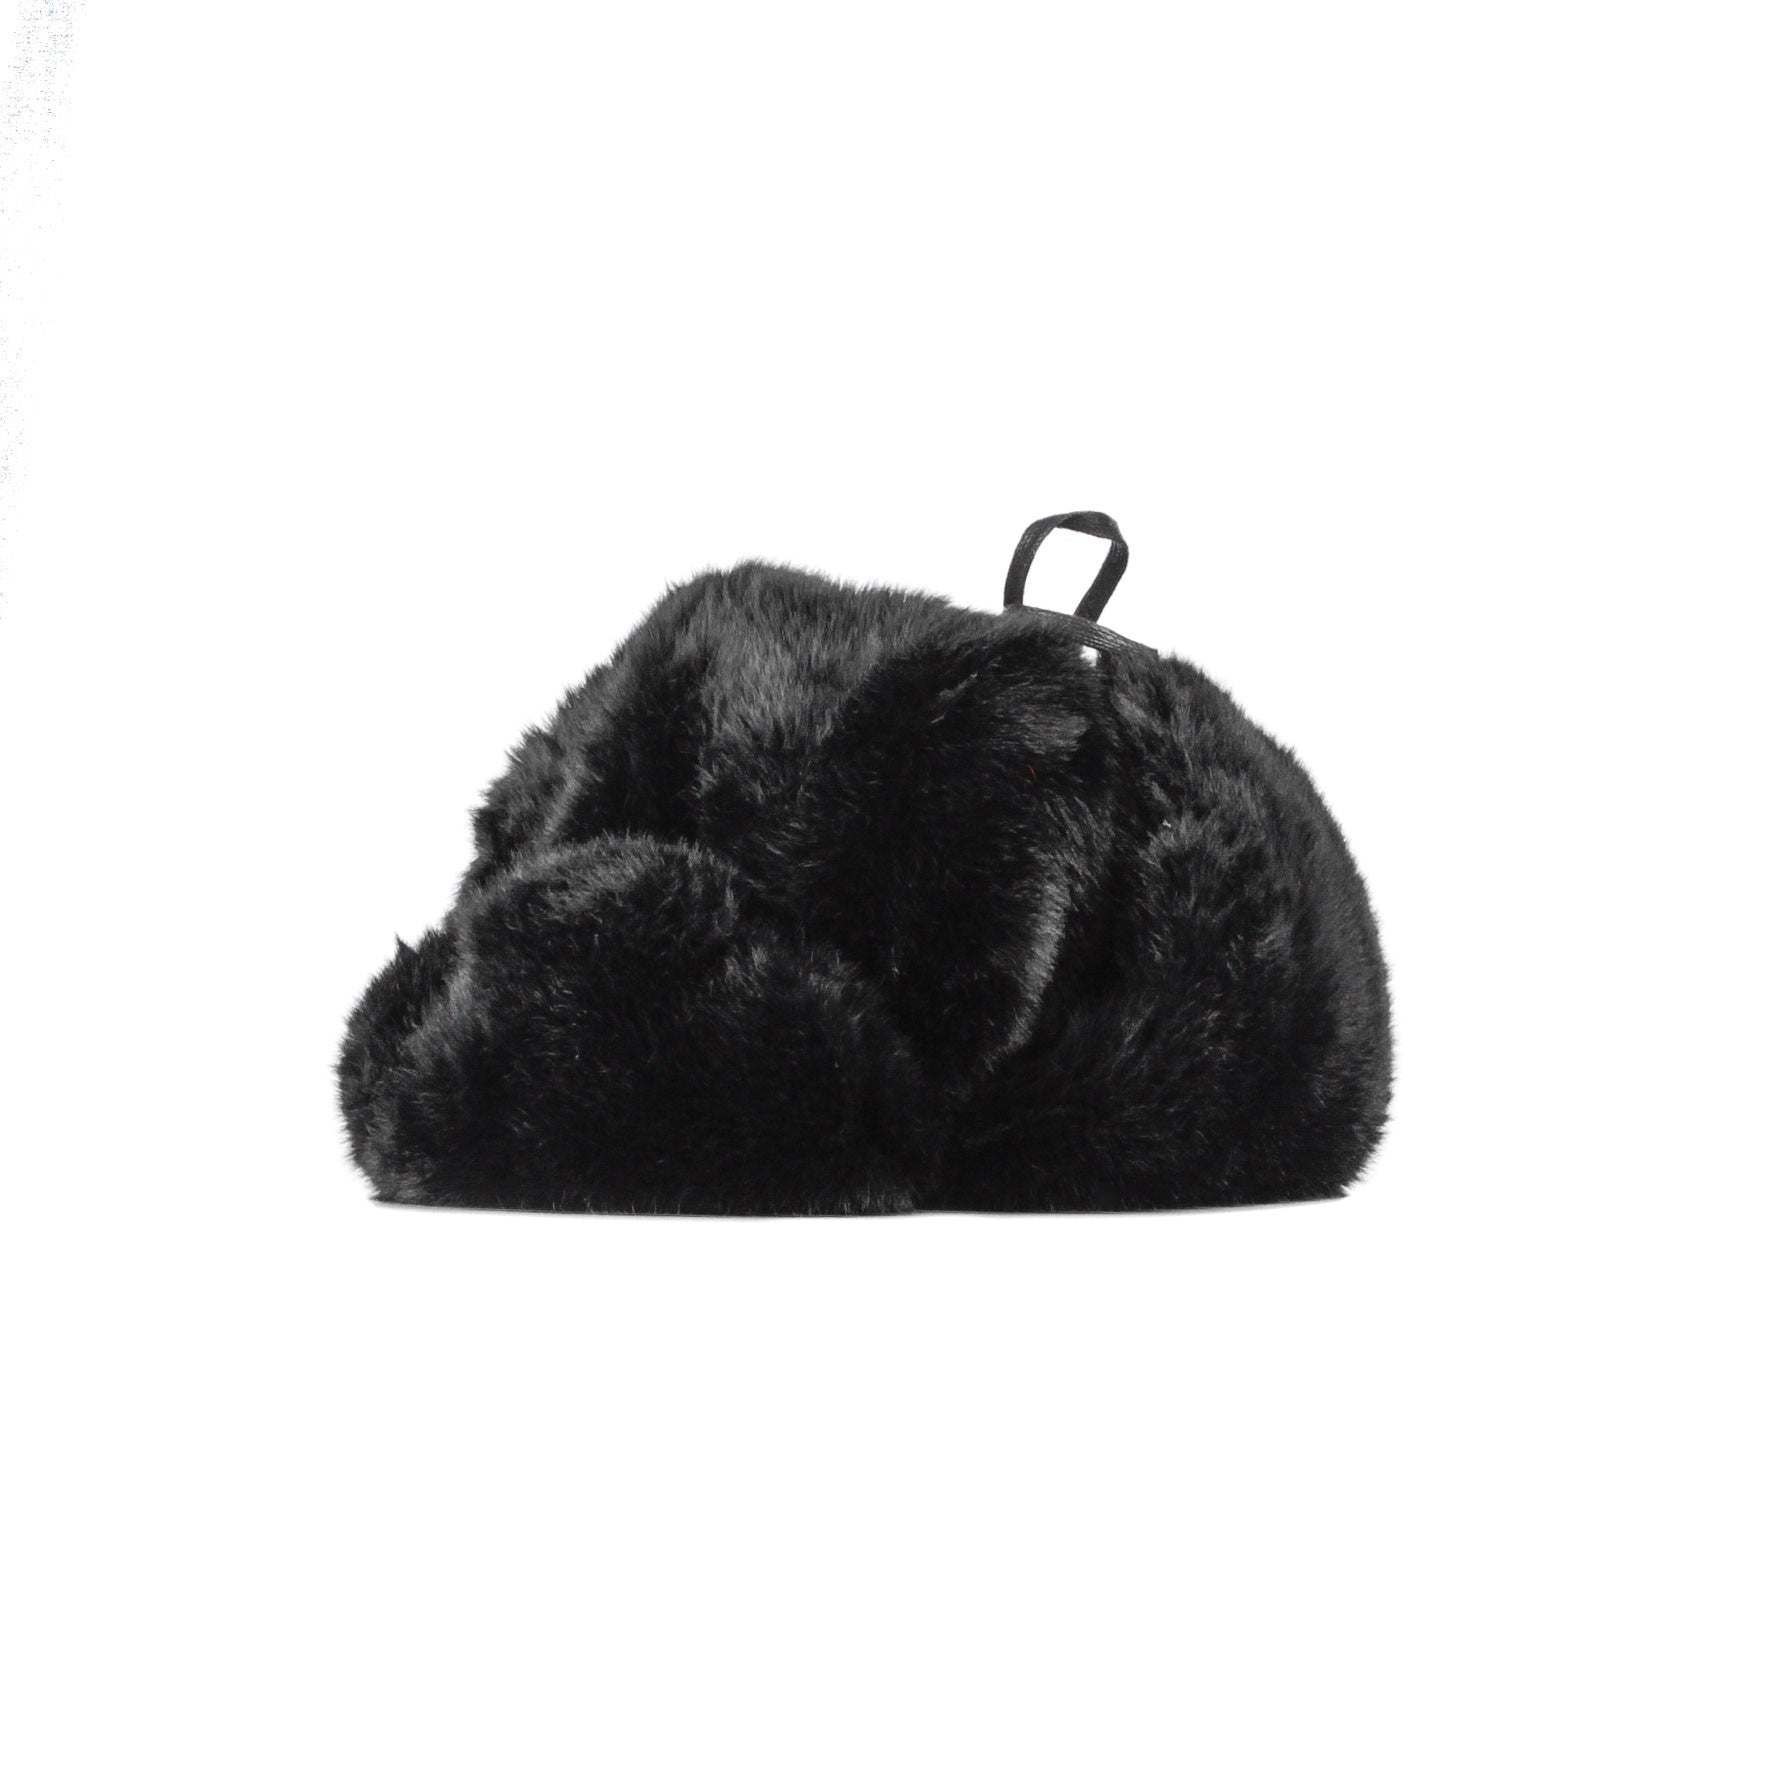 Men's Faux Fur Trapper Hat With Ears